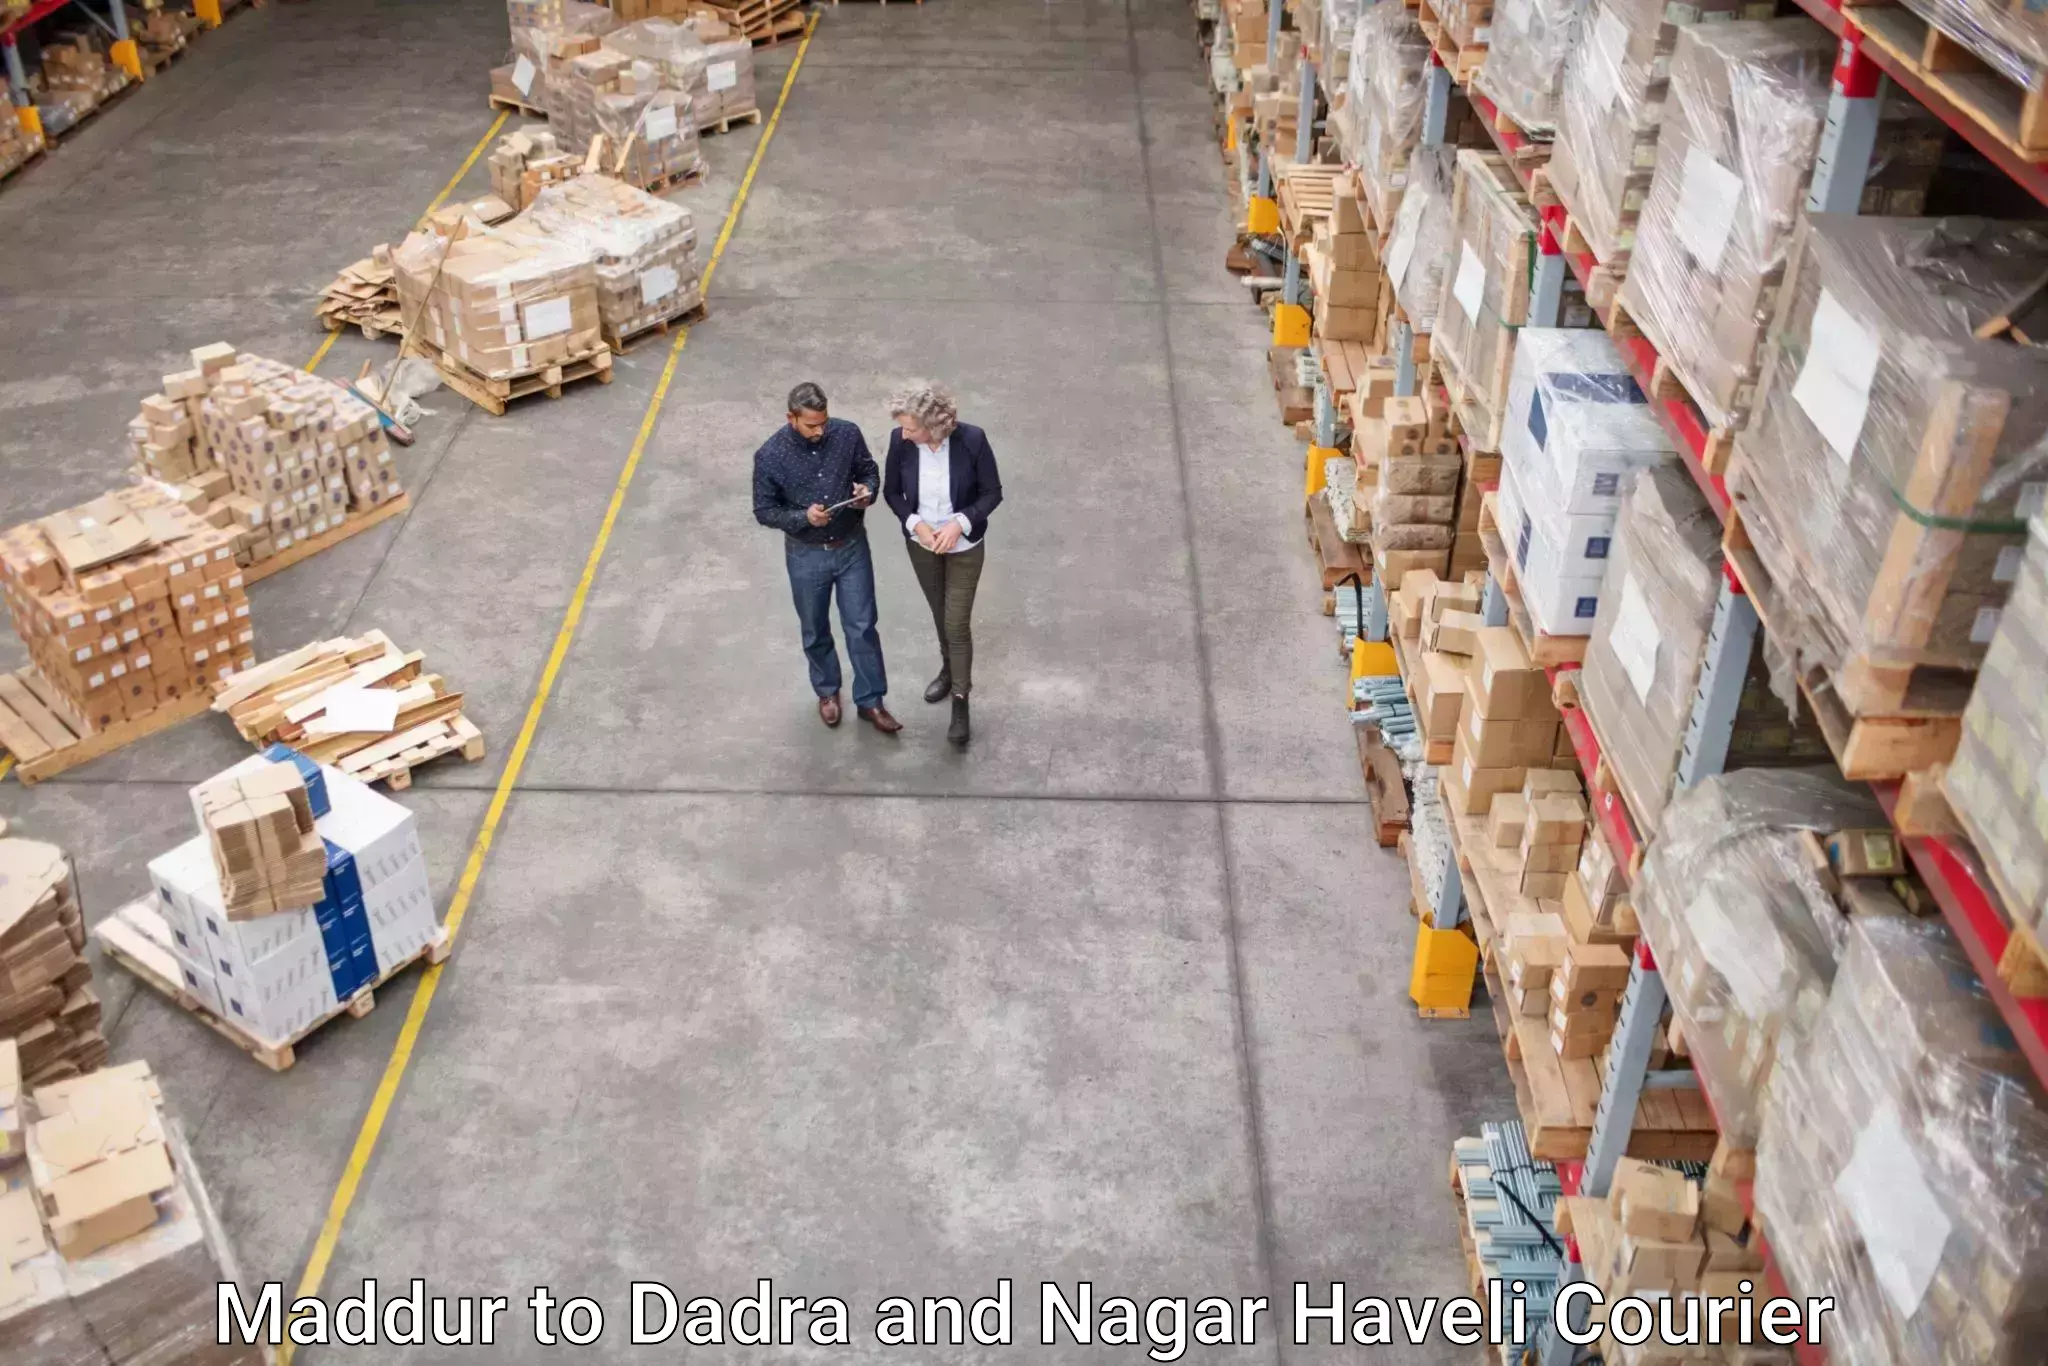 International parcel service Maddur to Dadra and Nagar Haveli